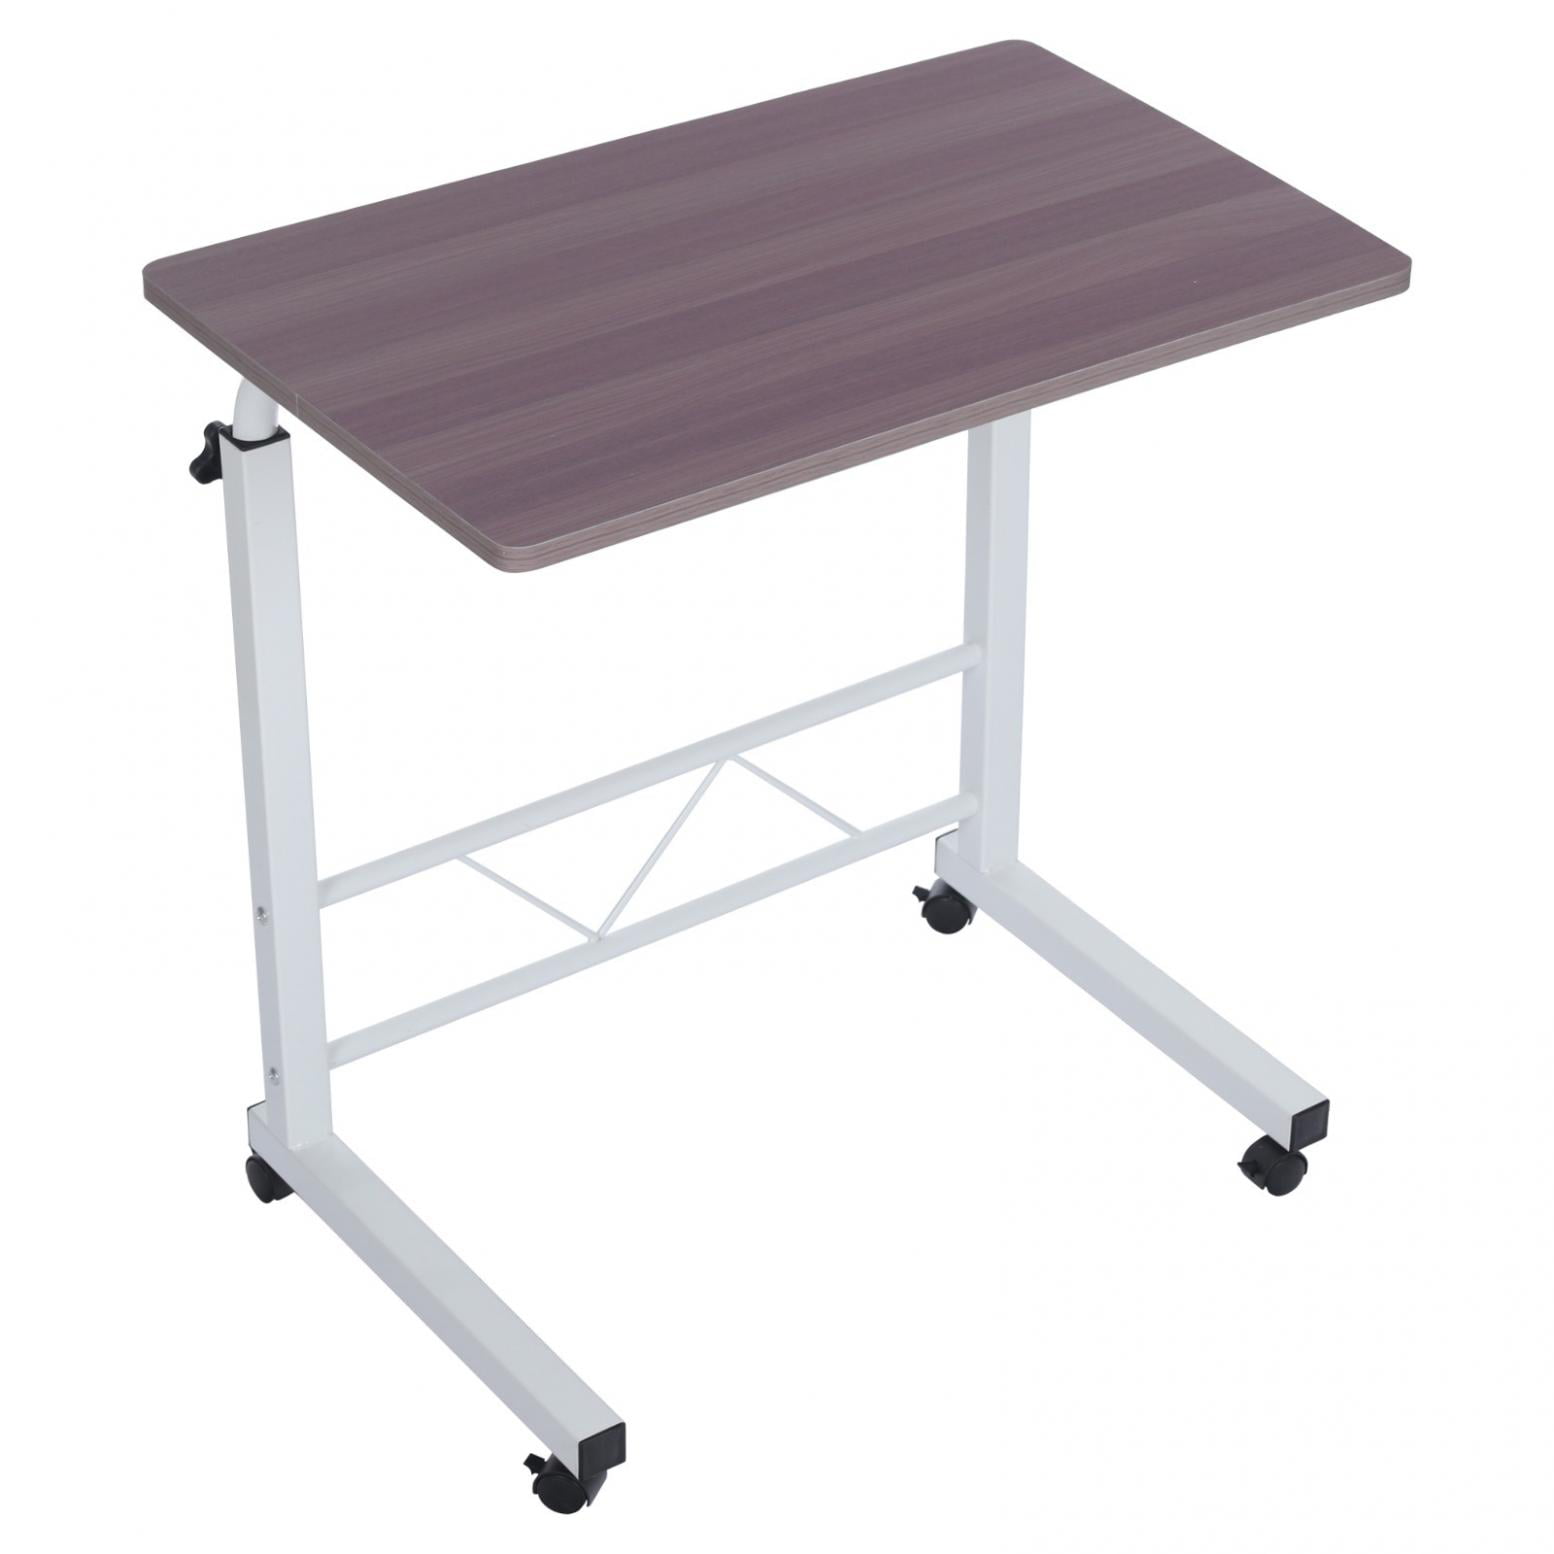 HUU C-Shaped Home Office Desk Height Adjustable Mobile Computer Bedside Table 